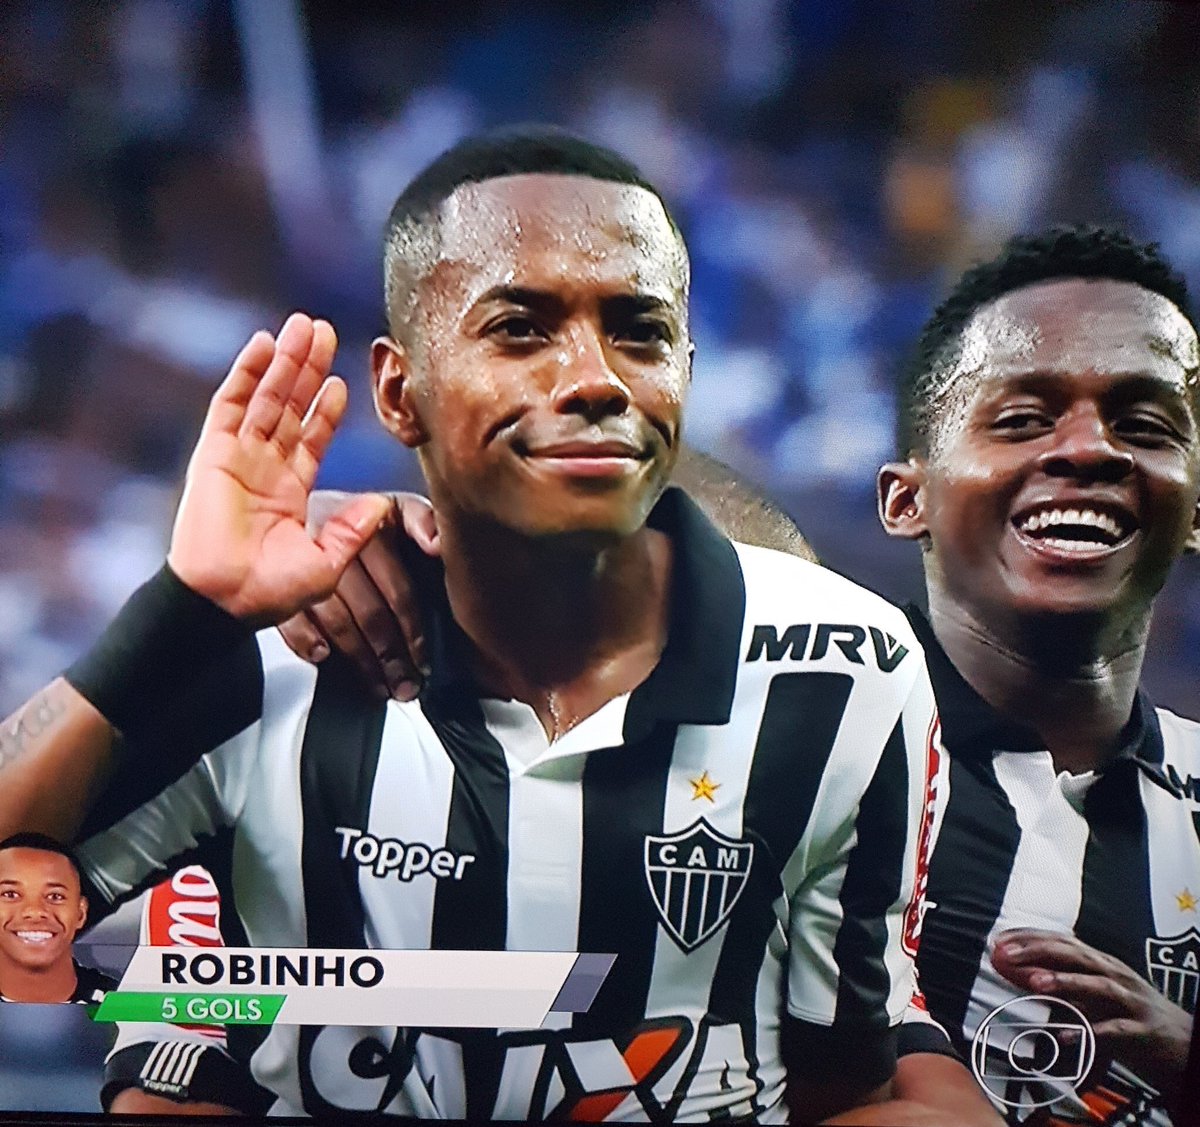 Gol perdido por titular do Santos leva torcedores à loucura: 'Desaprendeu a  jogar' - Lance!